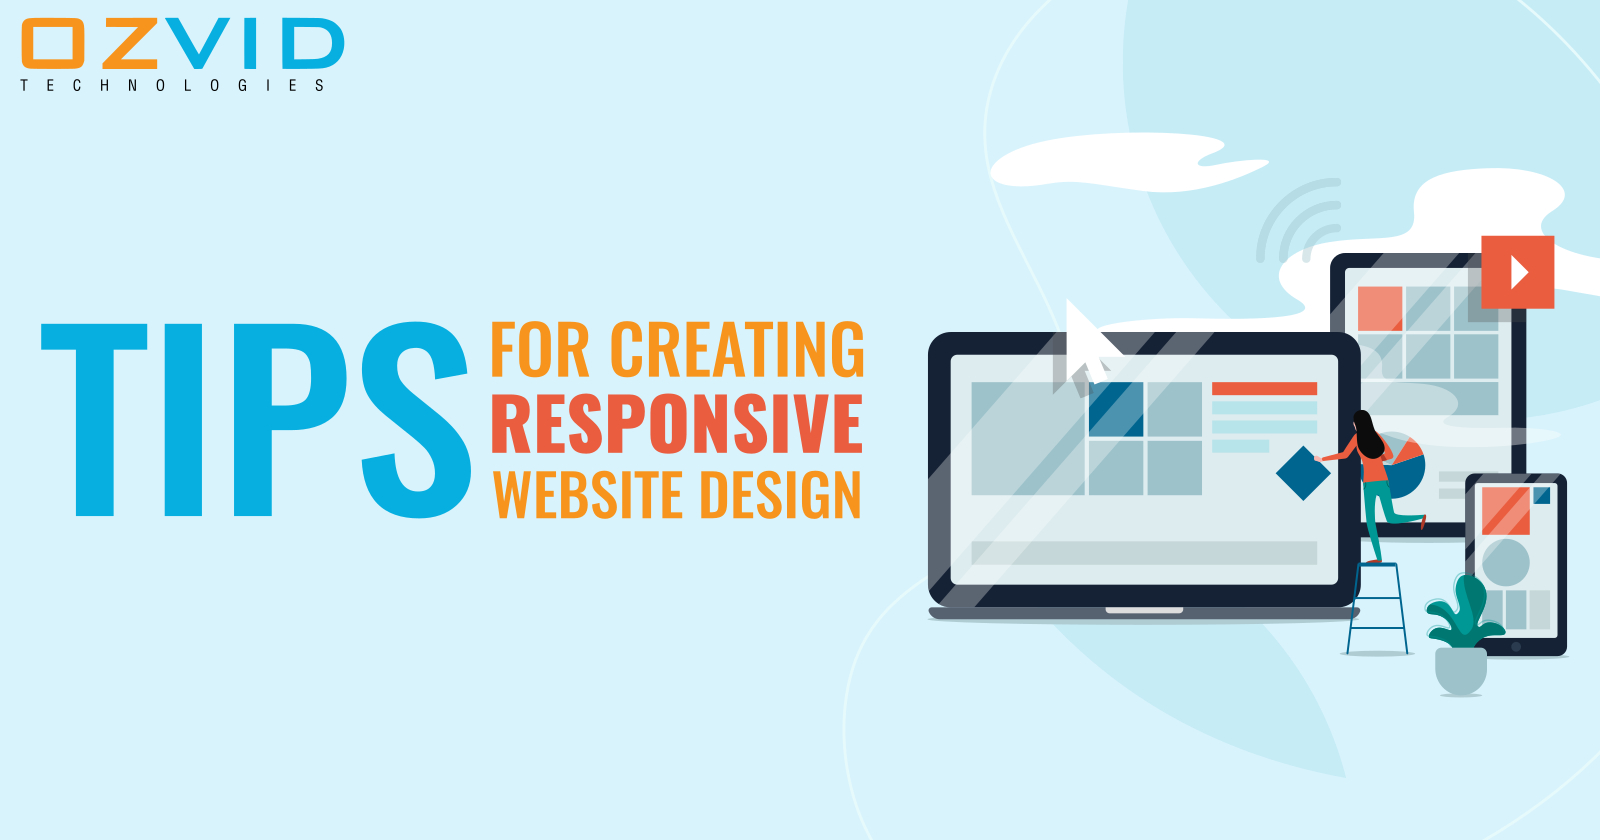 Tips for Creating Responsive Website Design